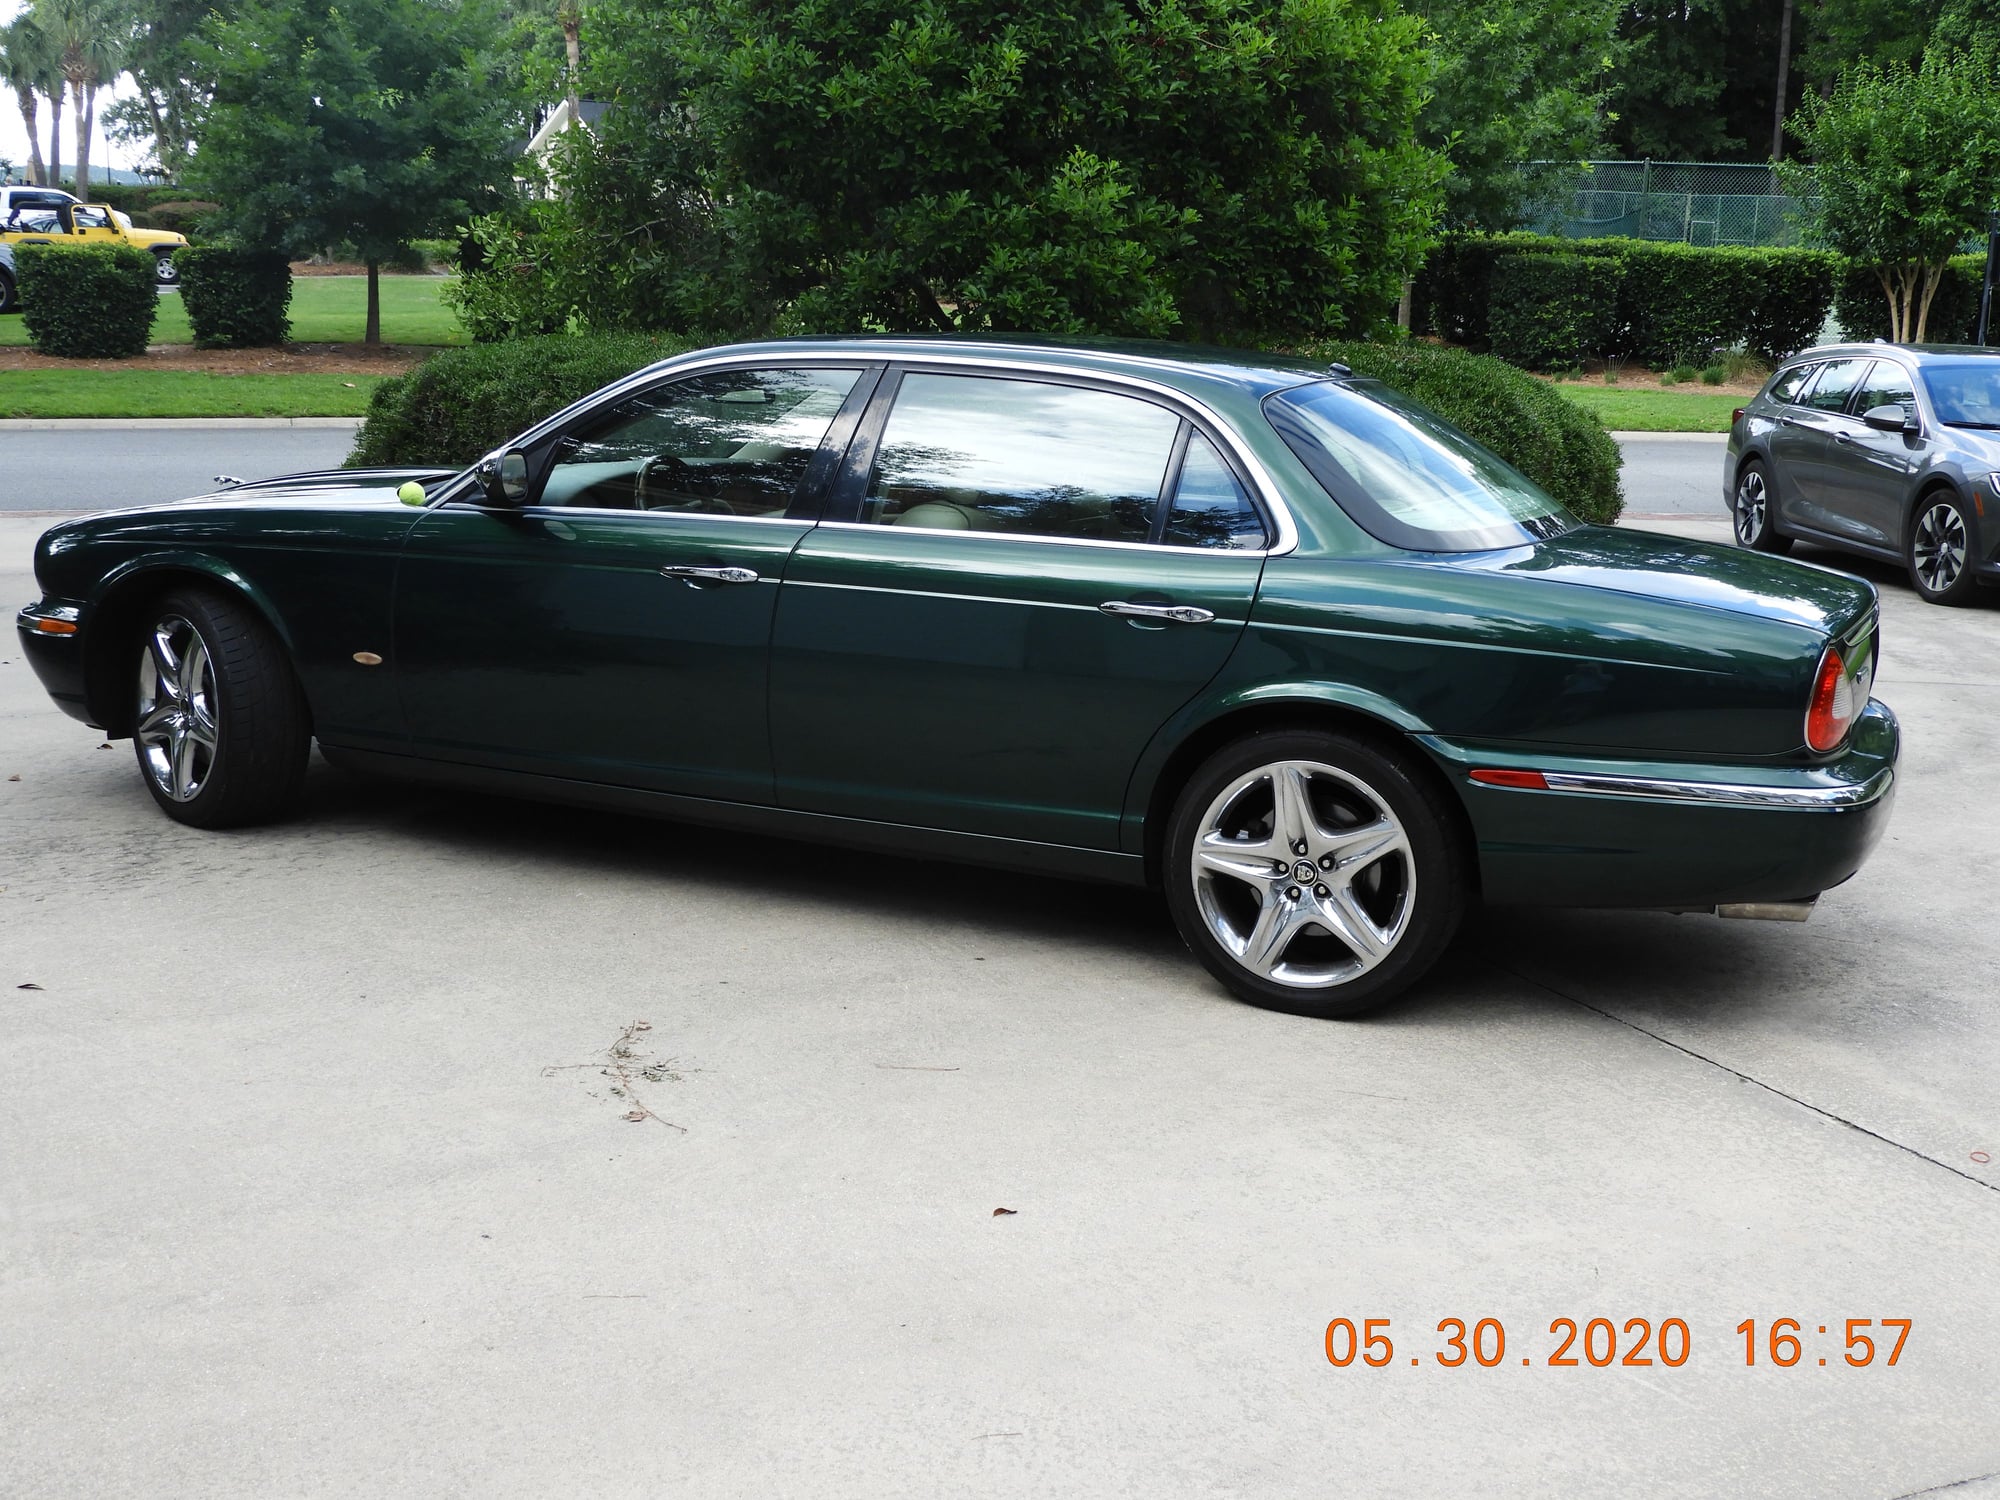 2006 Jaguar Vanden Plas - XJ* VDP Green 57K miles $9500 - Used - VIN SAJWA82B16SH08165 - 57,400 Miles - 8 cyl - 2WD - Automatic - Sedan - Other - Savannah, GA 31410, United States